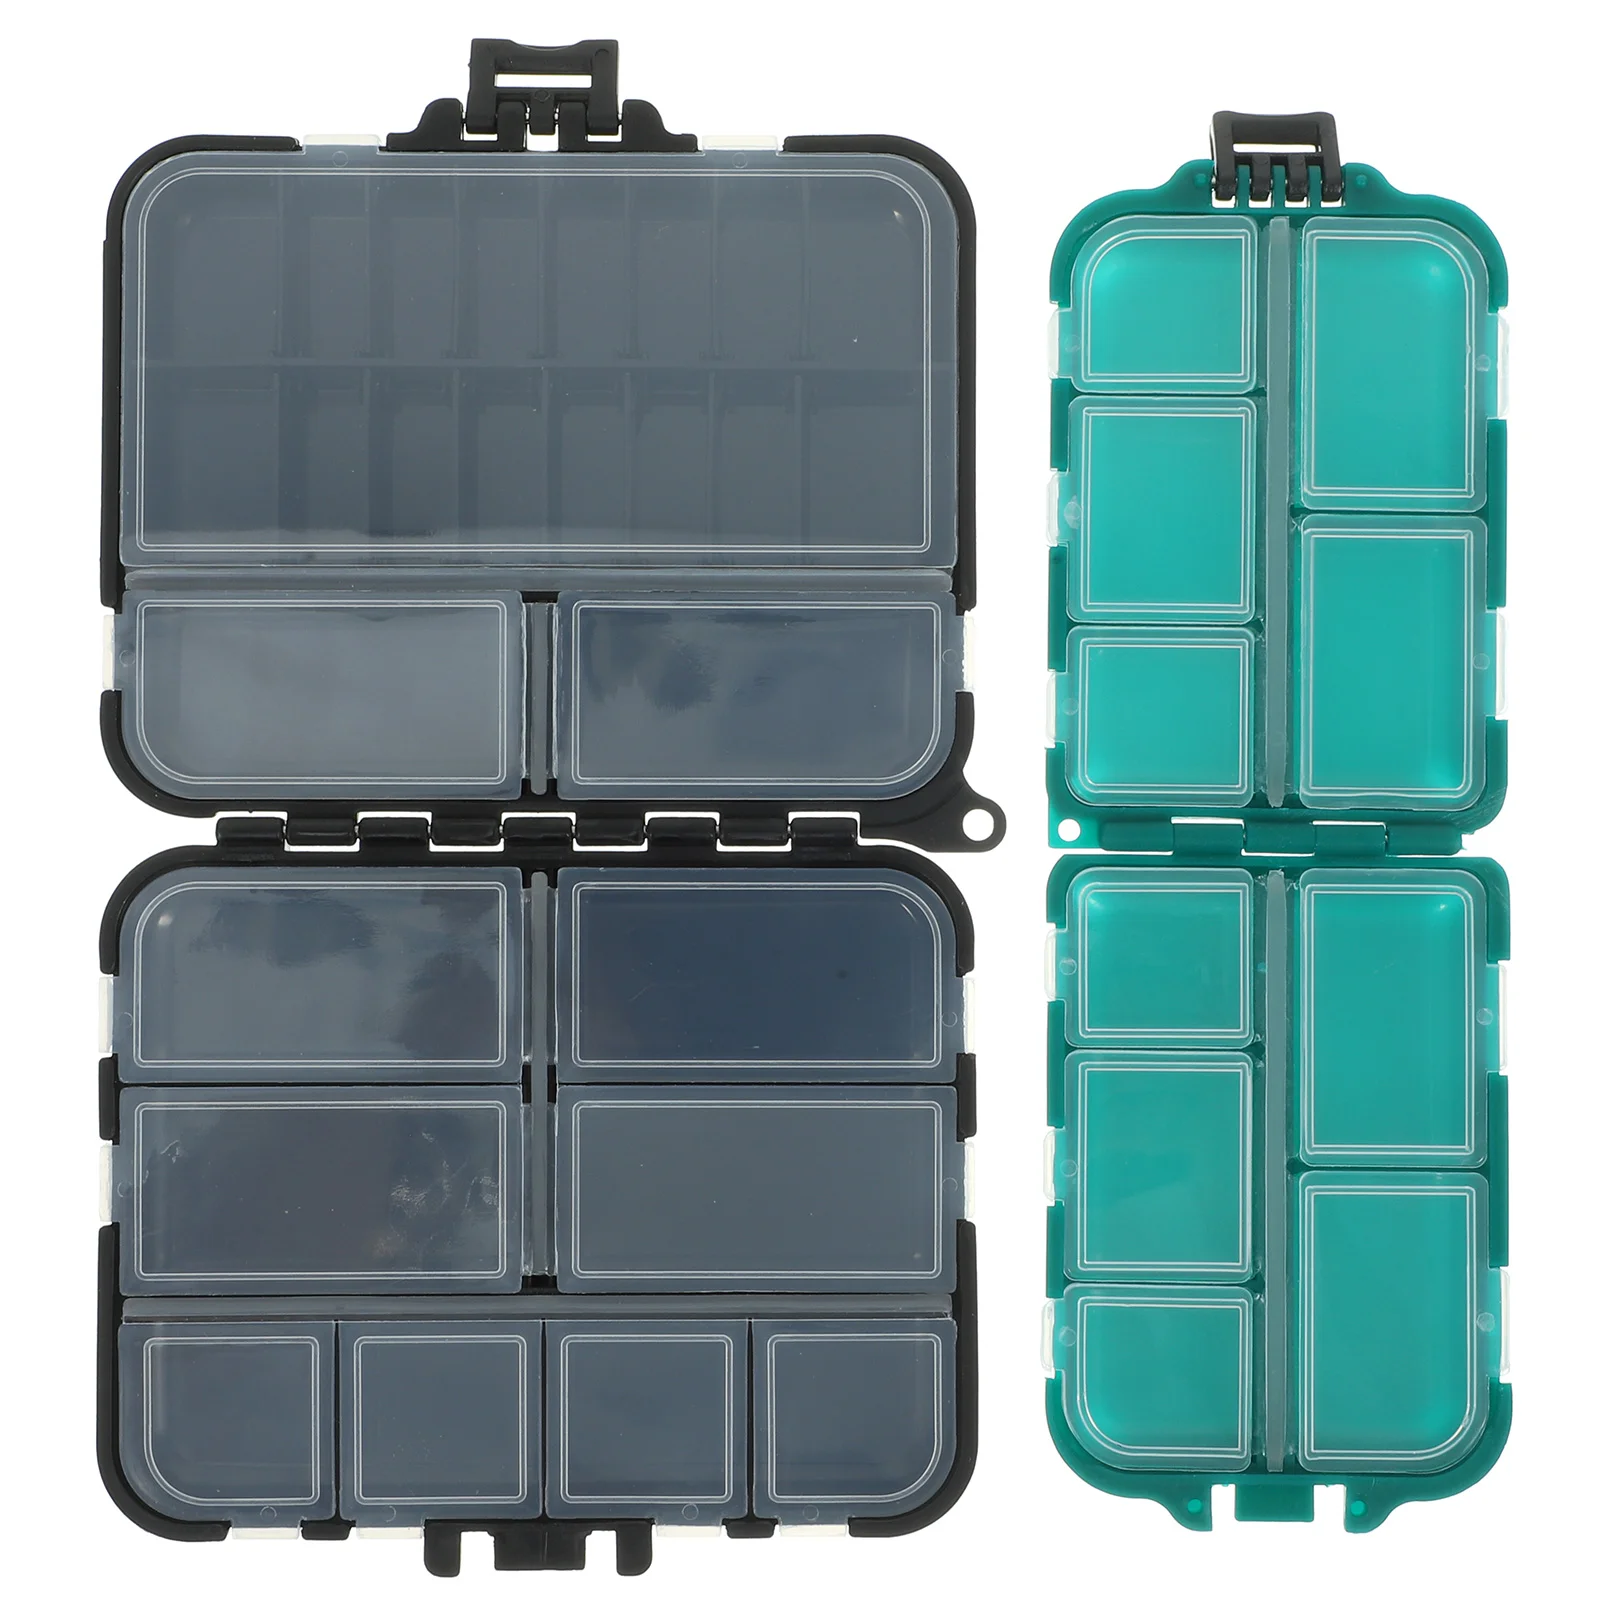 

2 Pcs Lure Bait Case Fishing Tackle Containers Storage Organizer Multiple-grids Cases Plastic